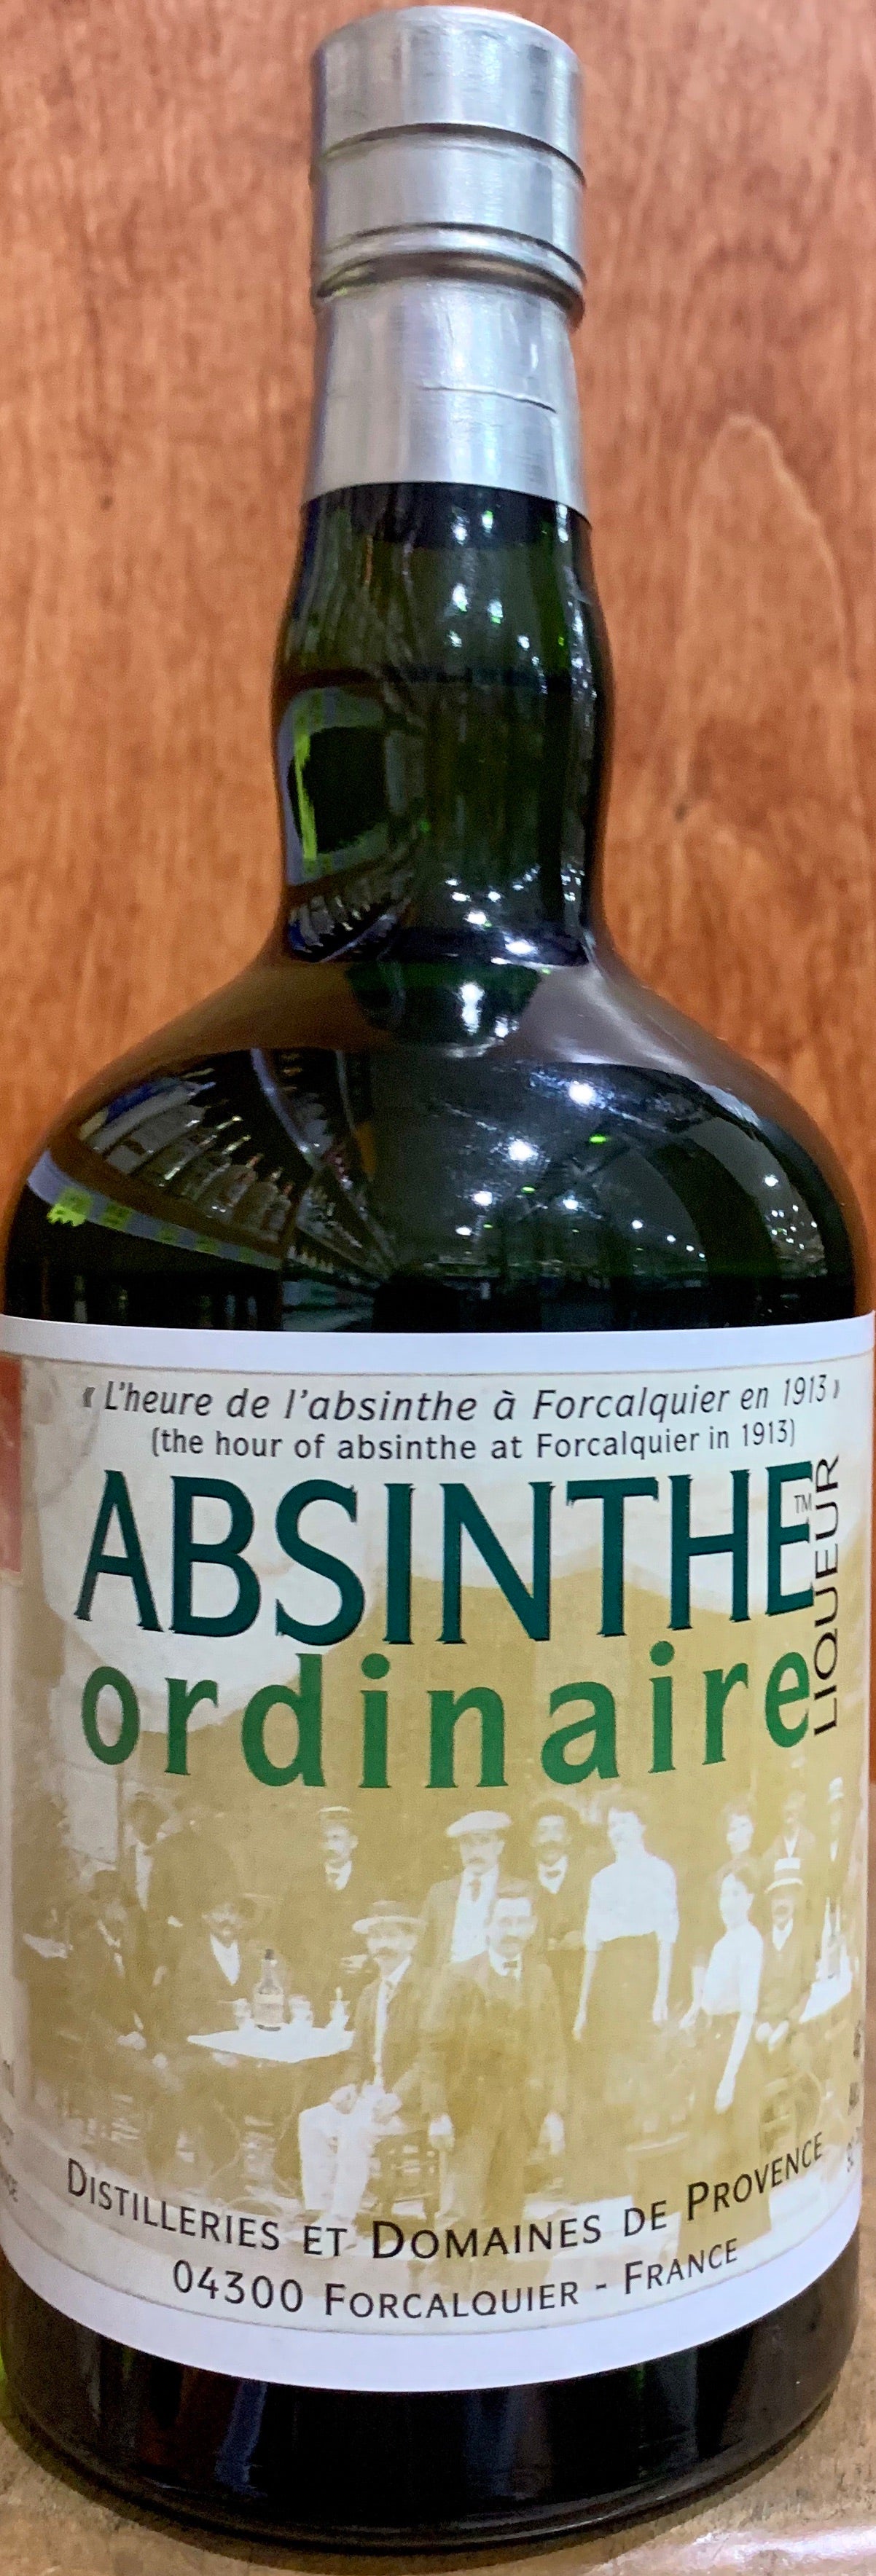 ABSINTHE ORDINAIRE - Bk Wine Depot Corp